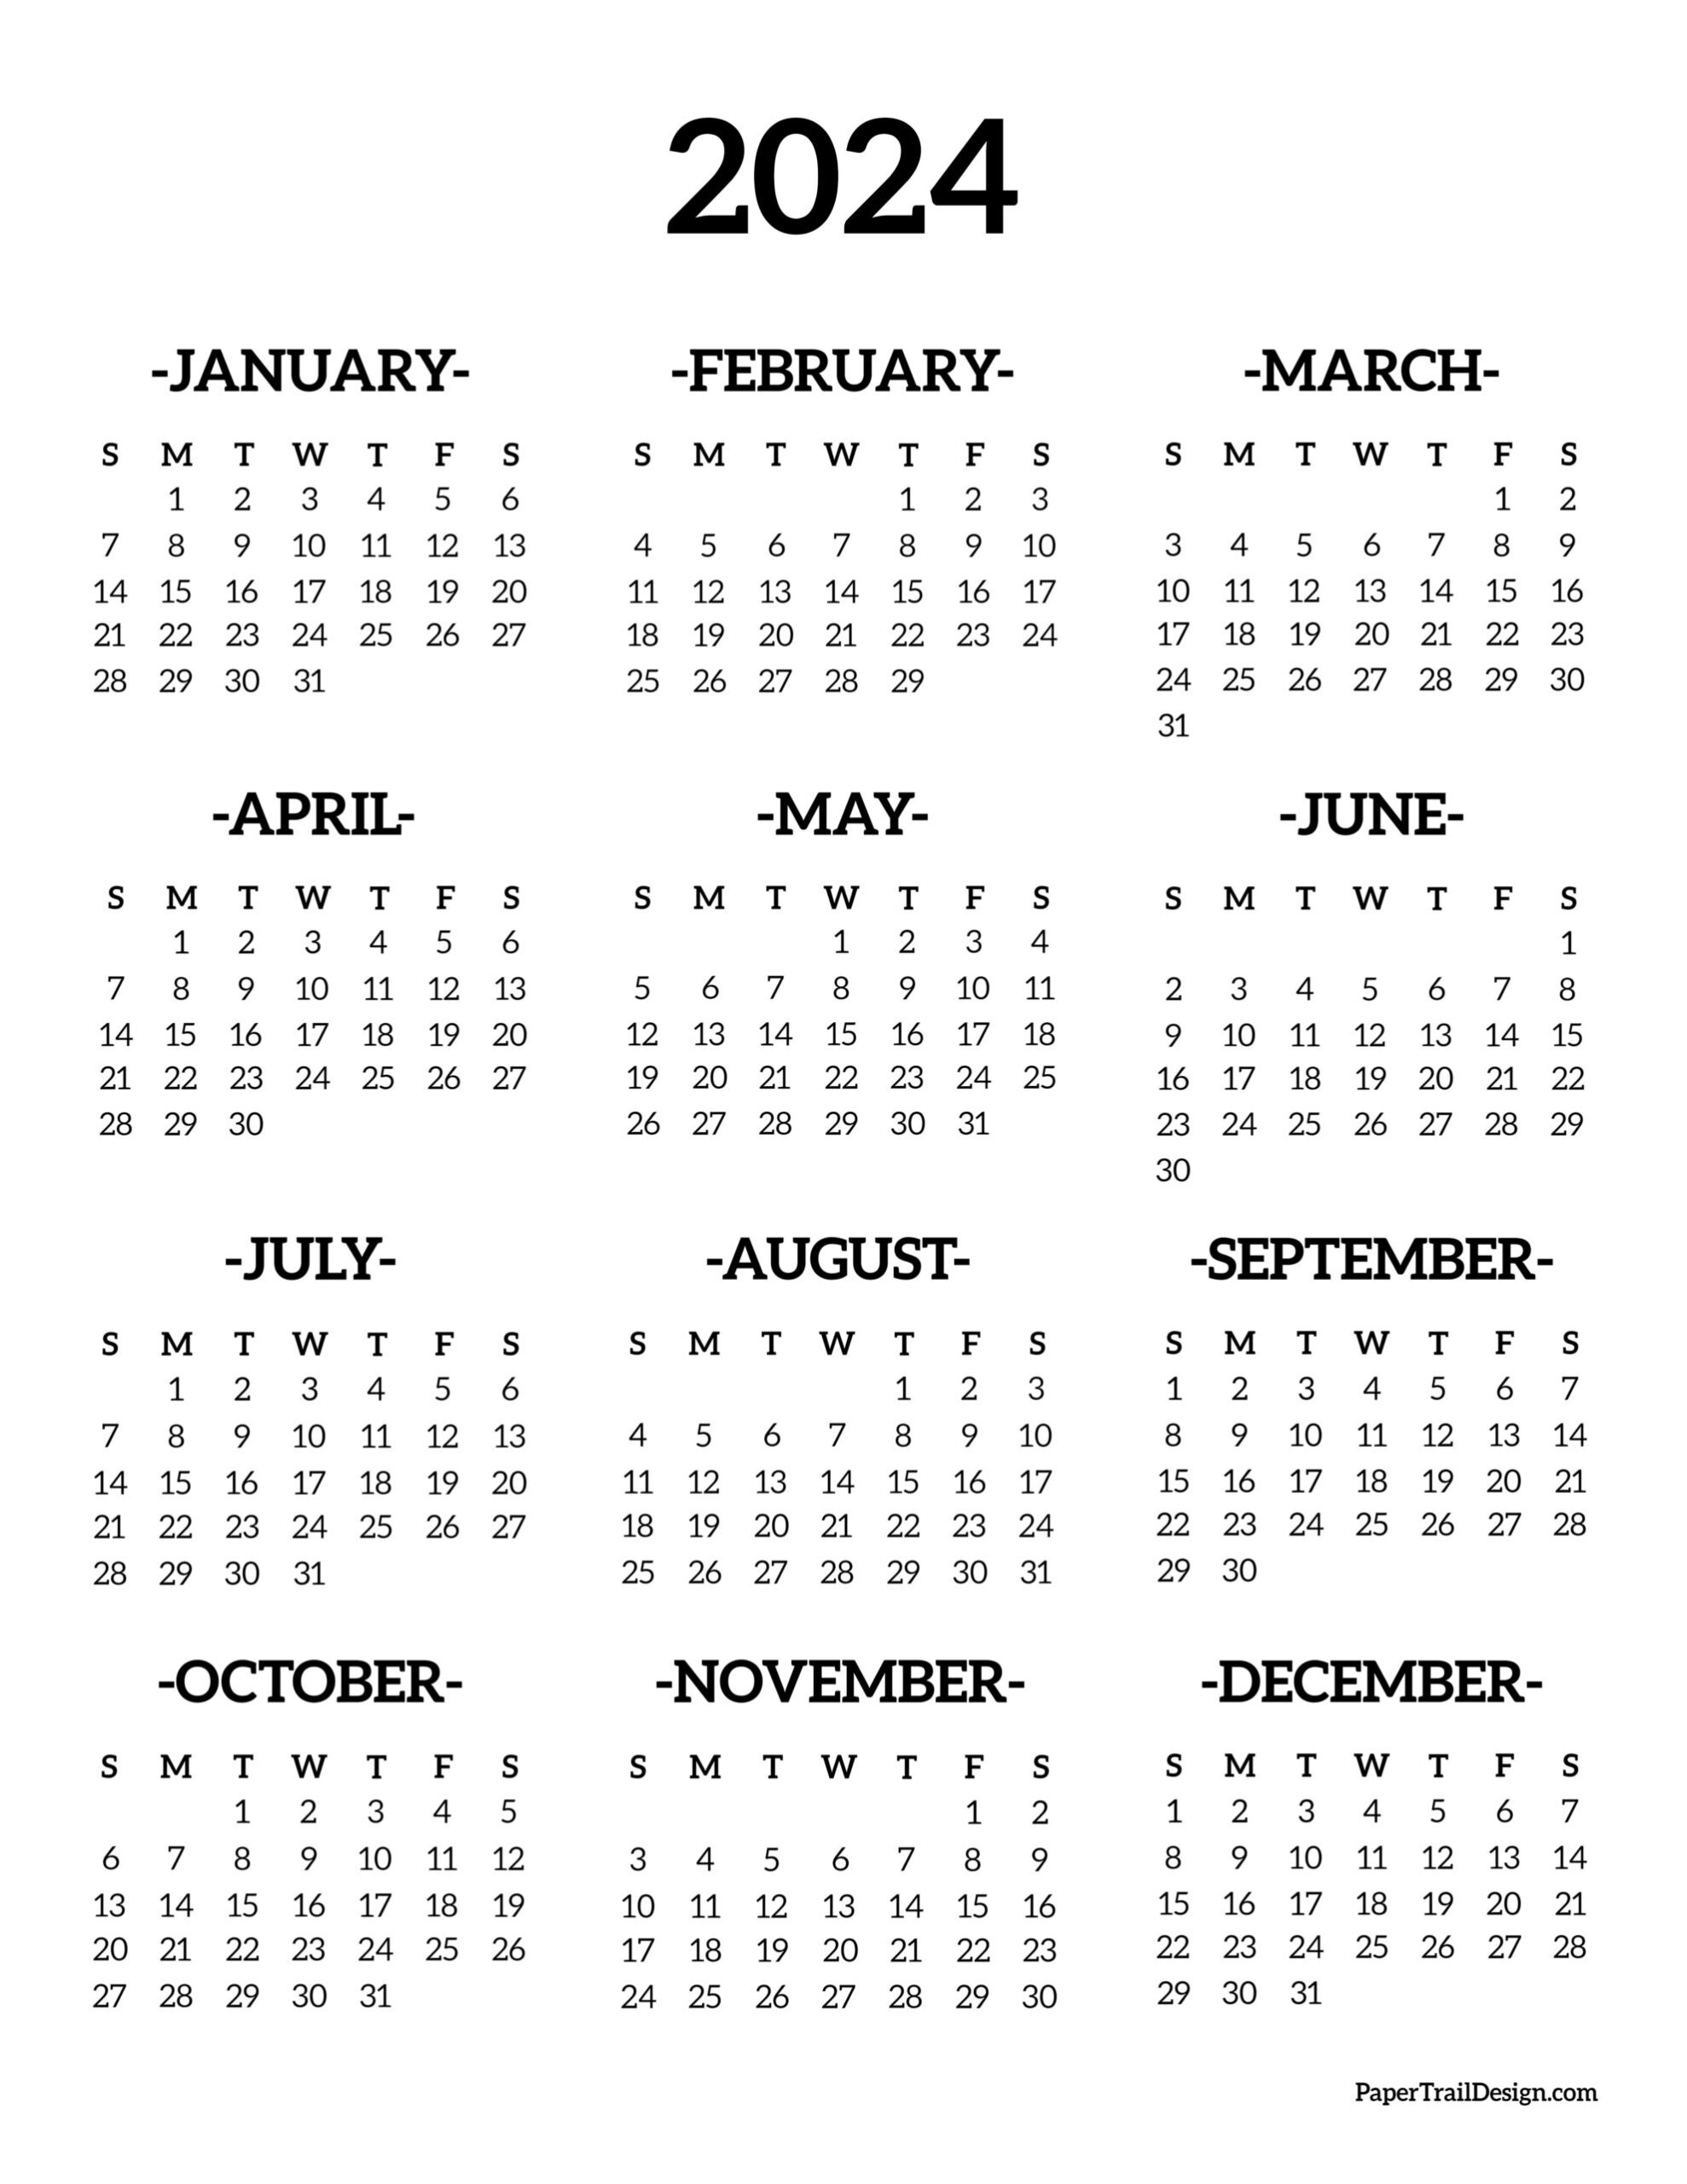 Calendar 2024 Printable One Page - Paper Trail Design | Calendar Template 2024 Free